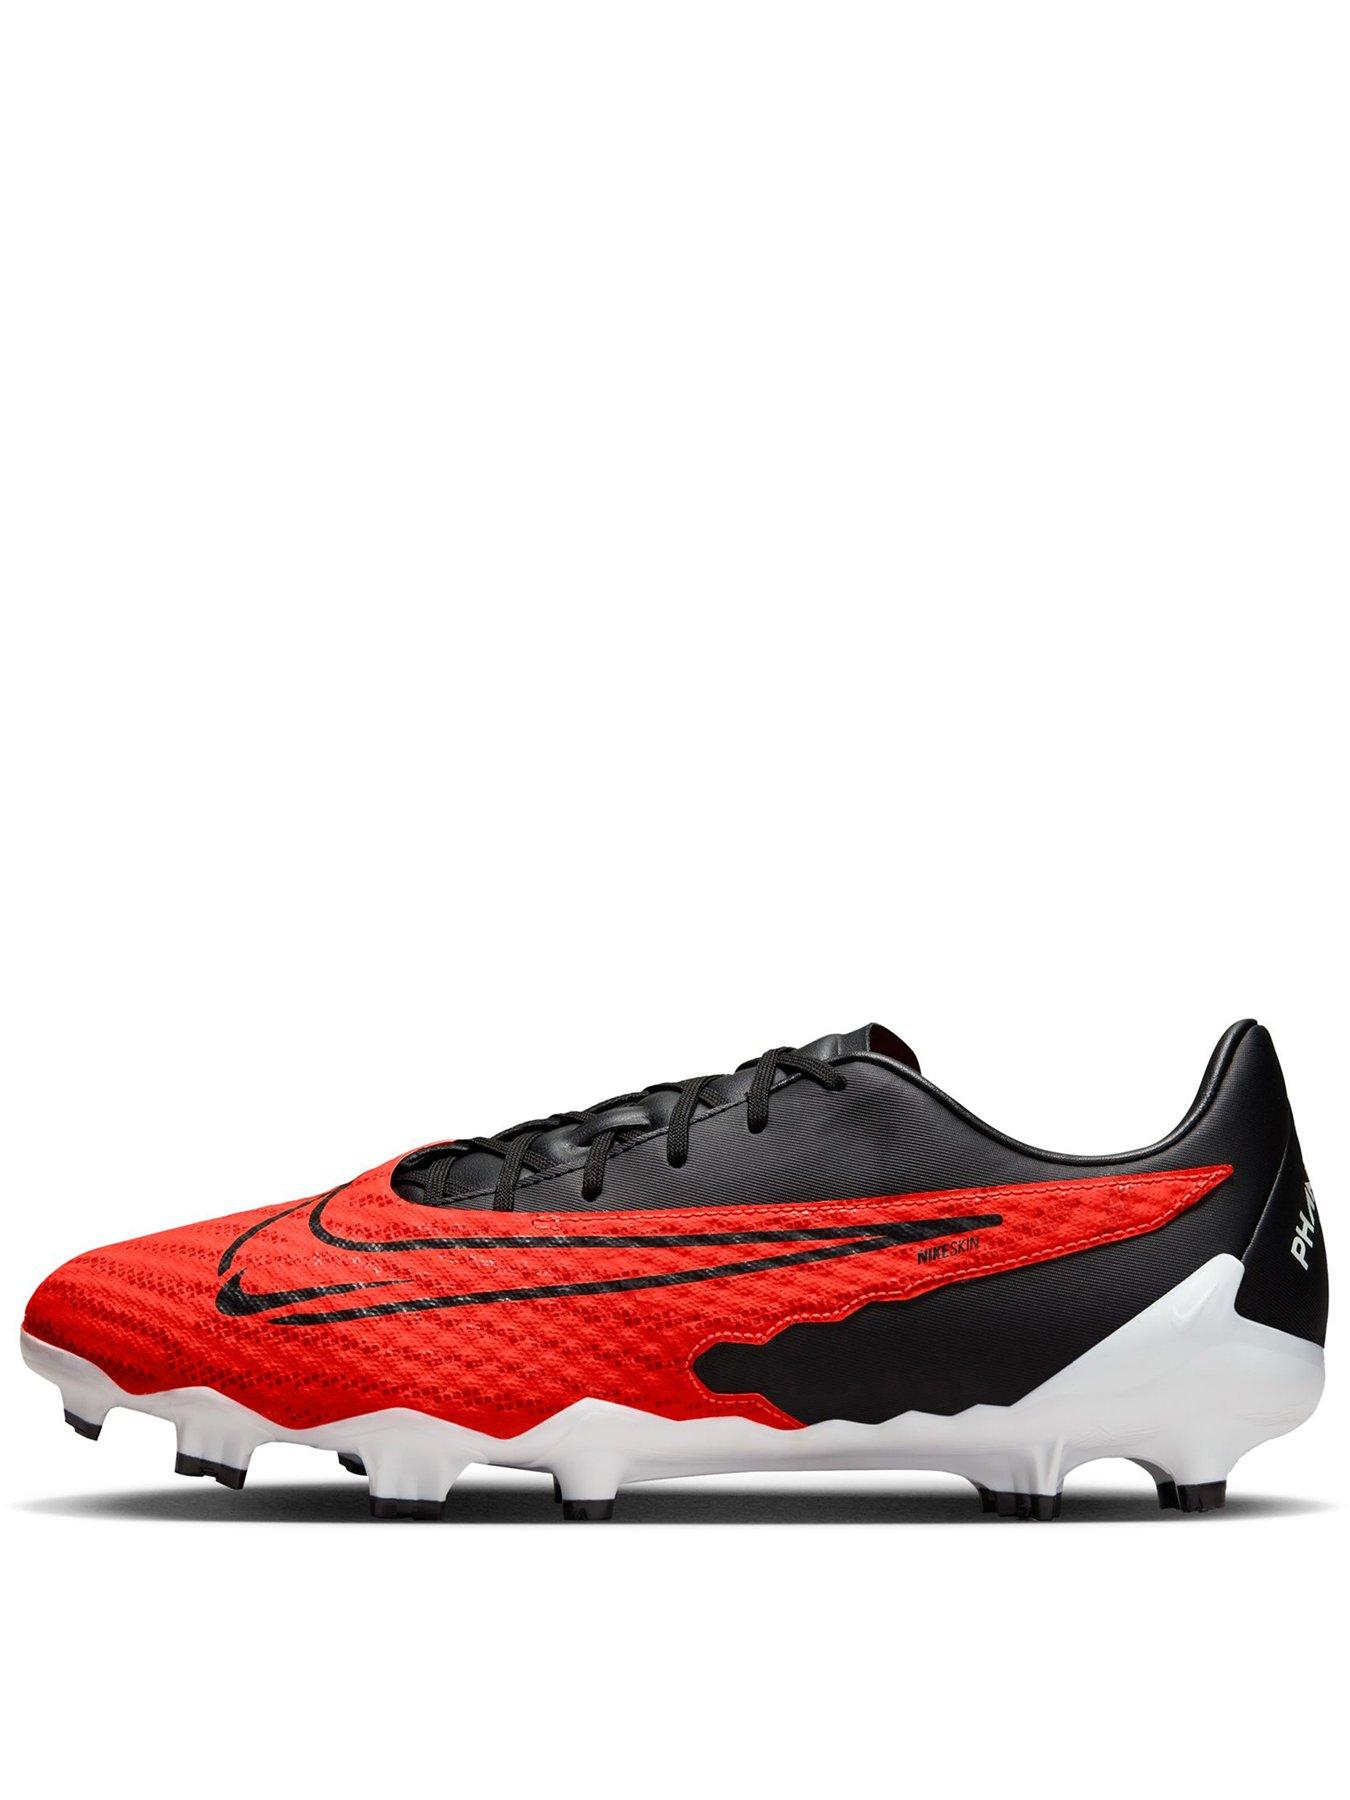 Nike Mens Phantom Gt Academy Firm Ground Football Boot - Red